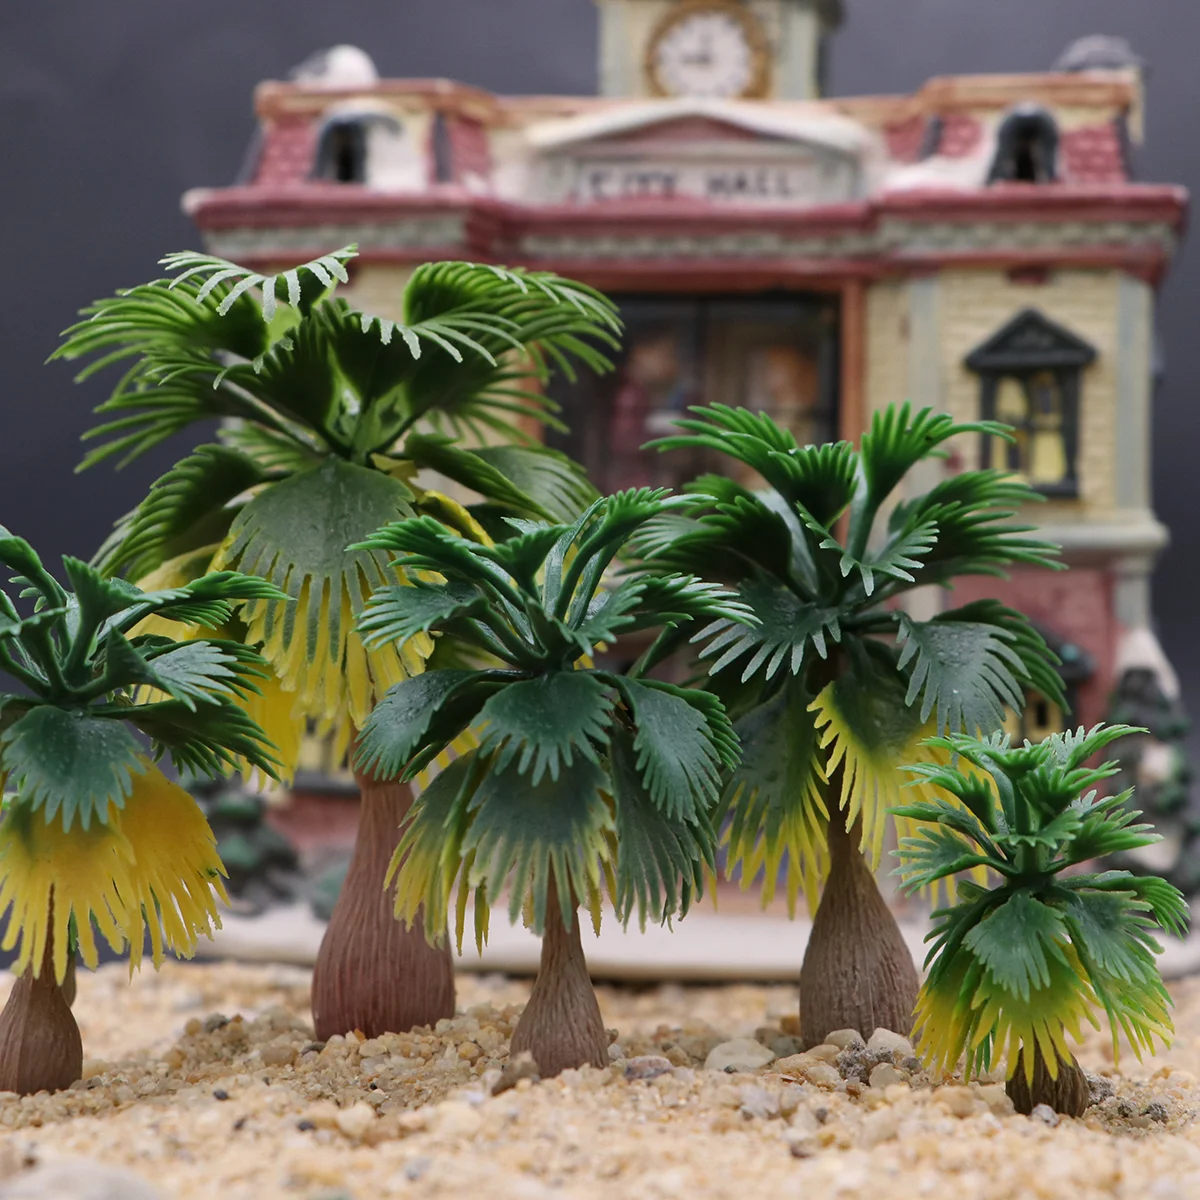 

Trees Model Palm Tree Scenery Mini Diorama Rainforest Landscapeminiature Scale Green Train Architecture Models Tropical